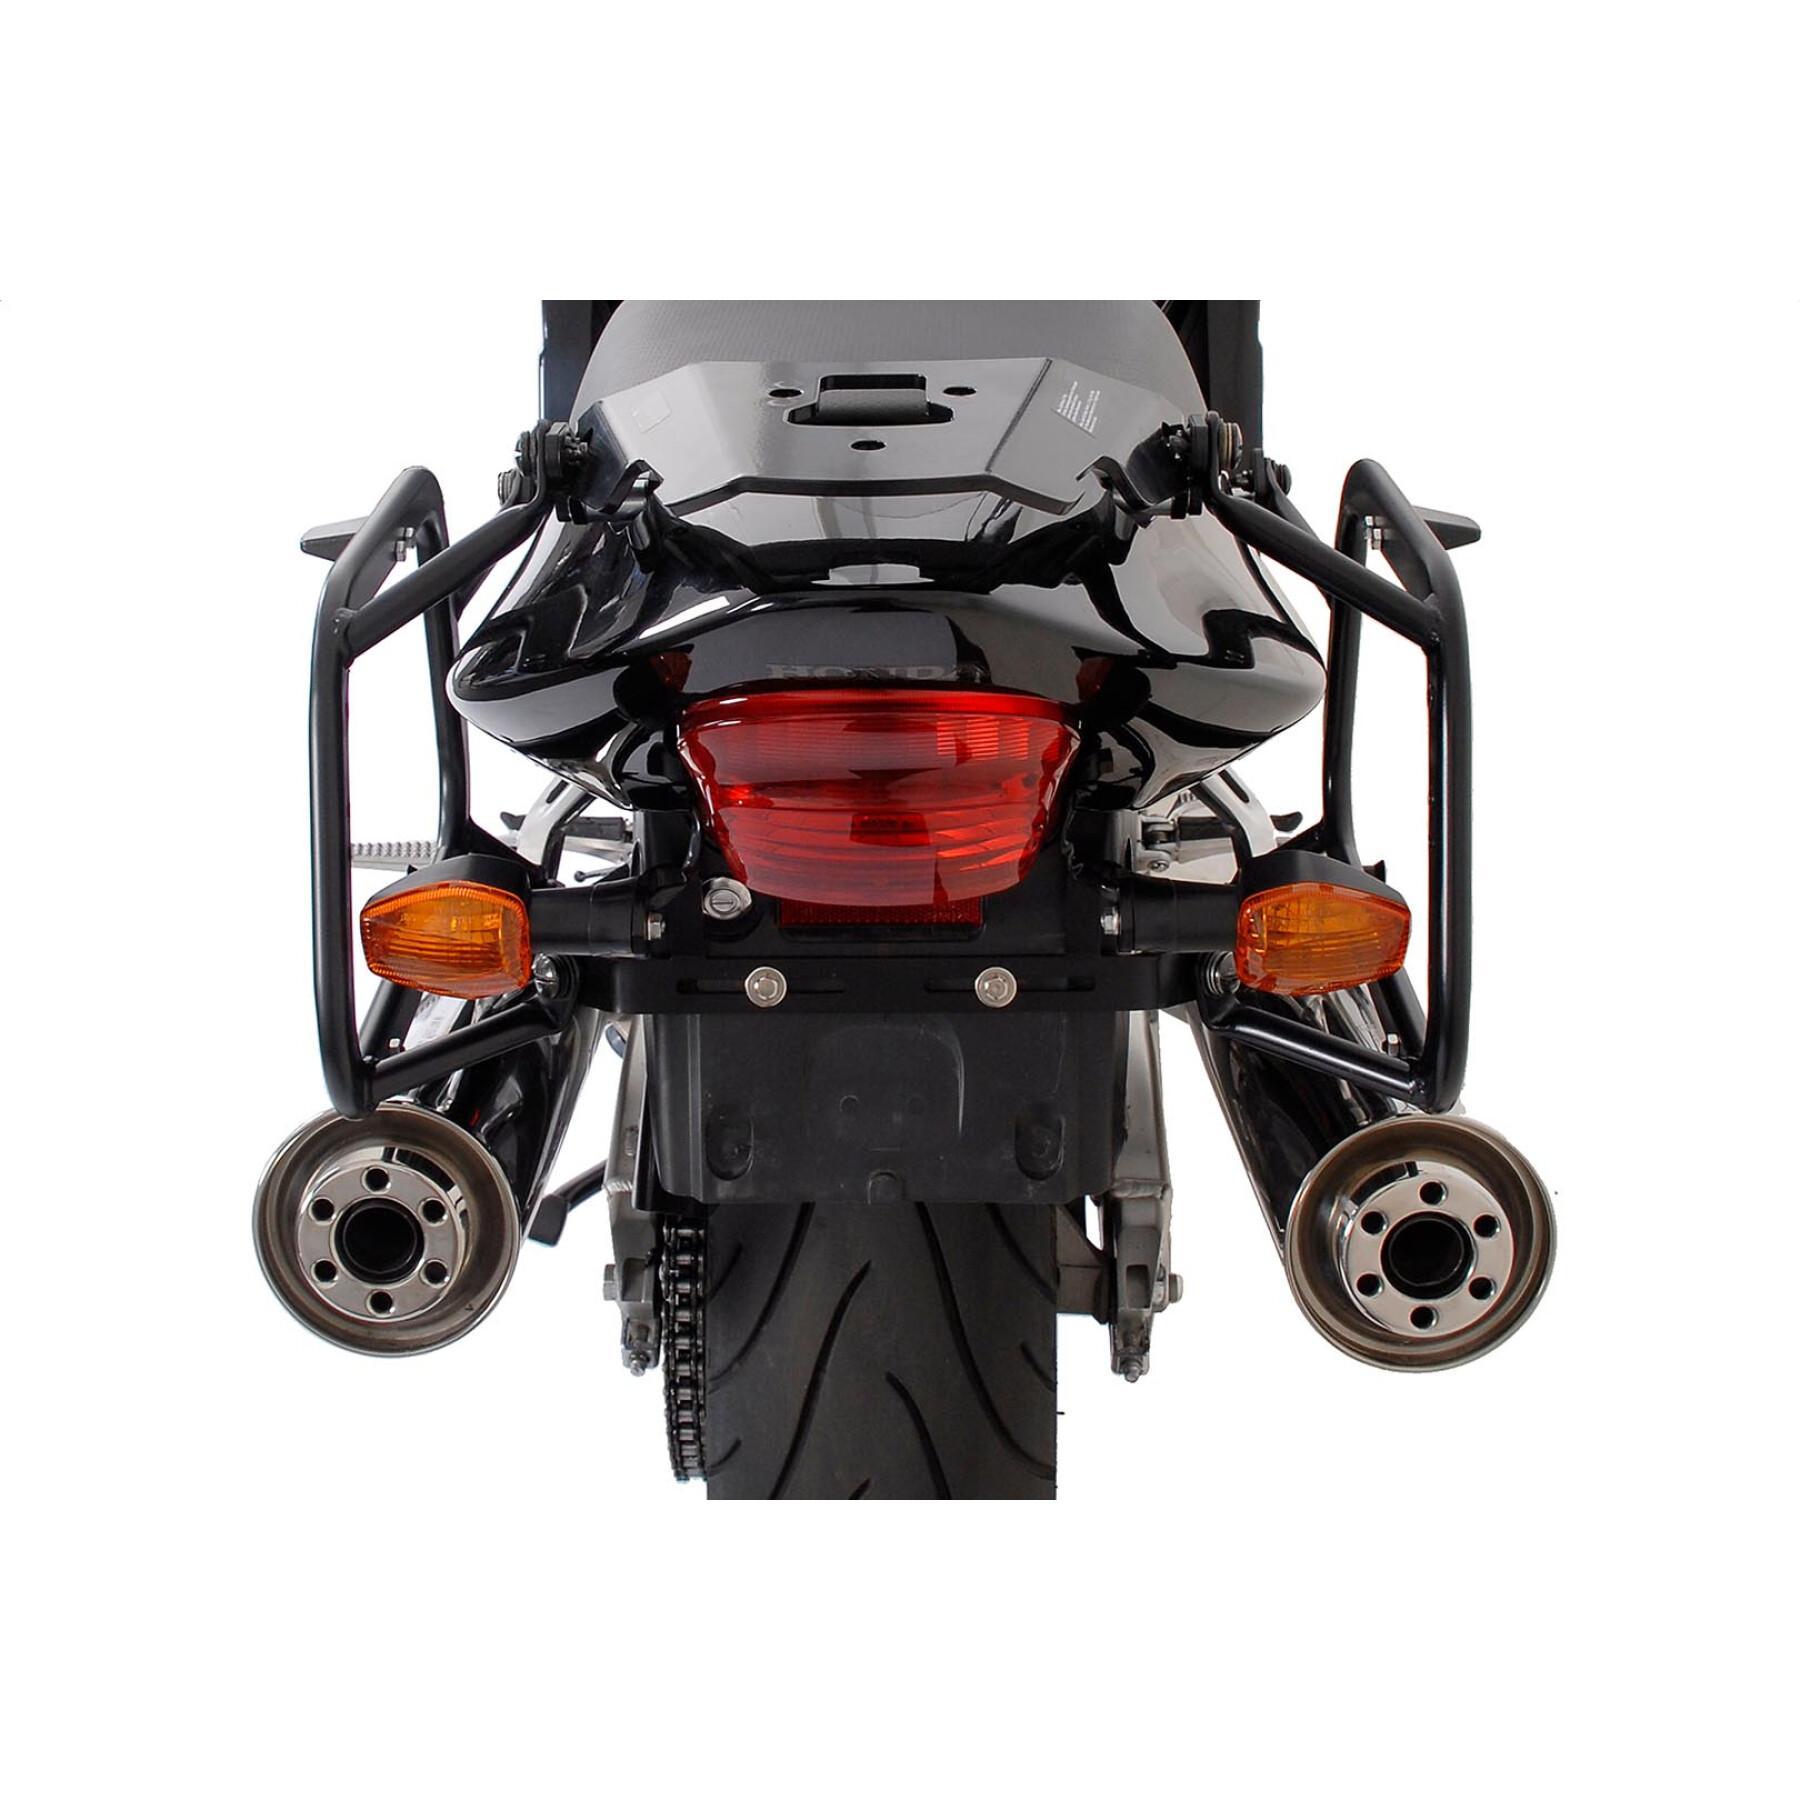 Motorcycle side case support Sw-Motech Evo. Honda Cbr 1100 Xx Blackrbird (99-07)